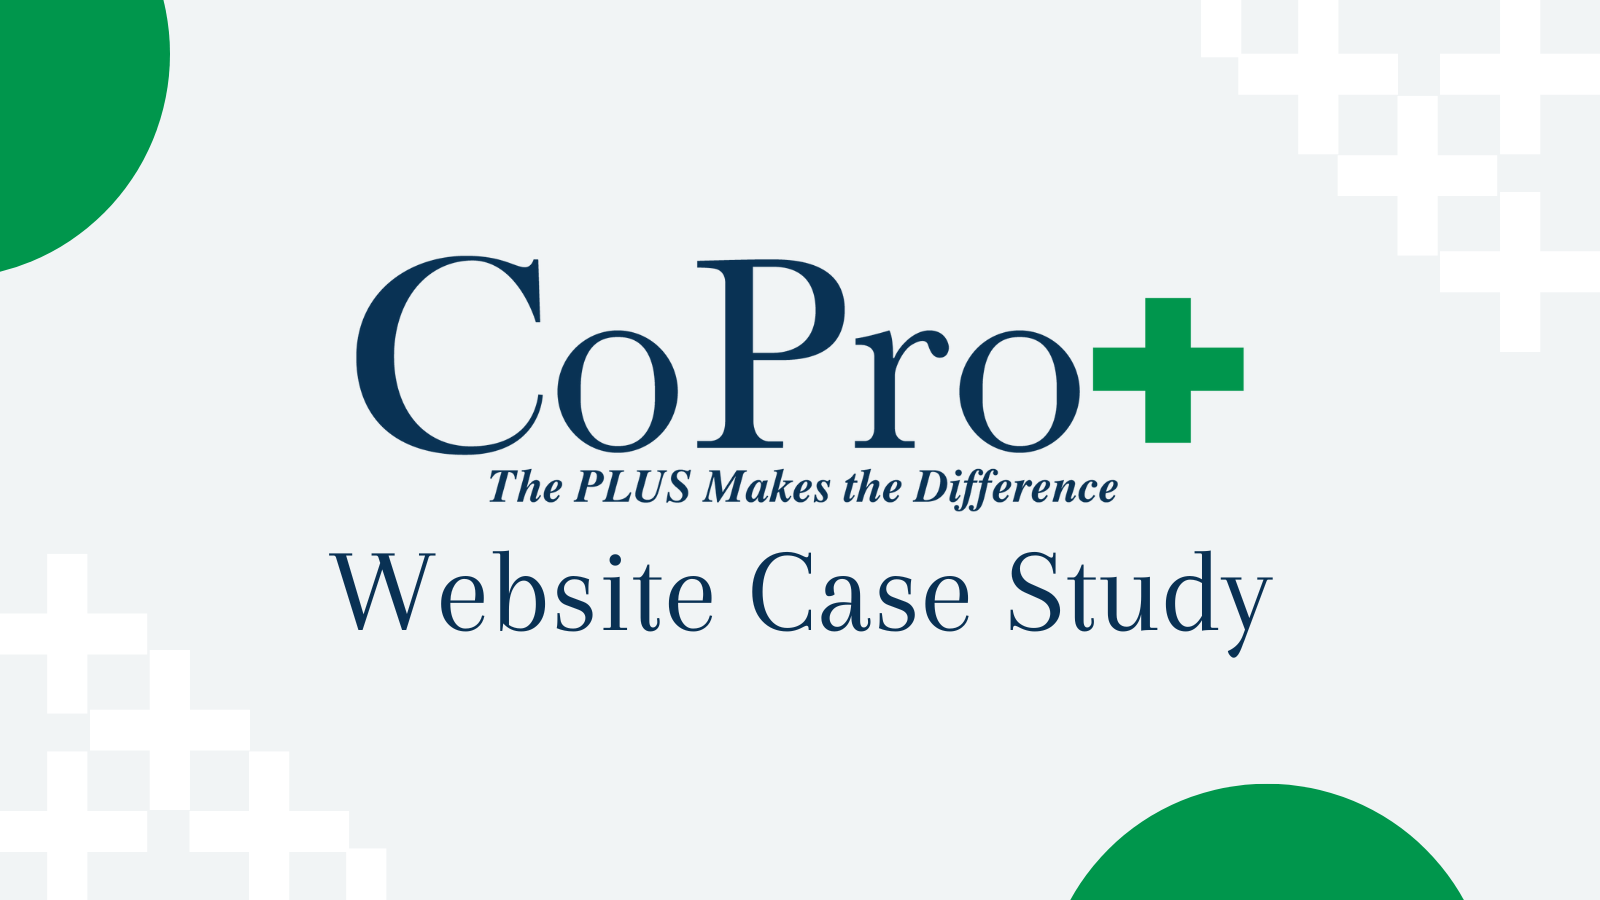 CoPro+, Website Case Study